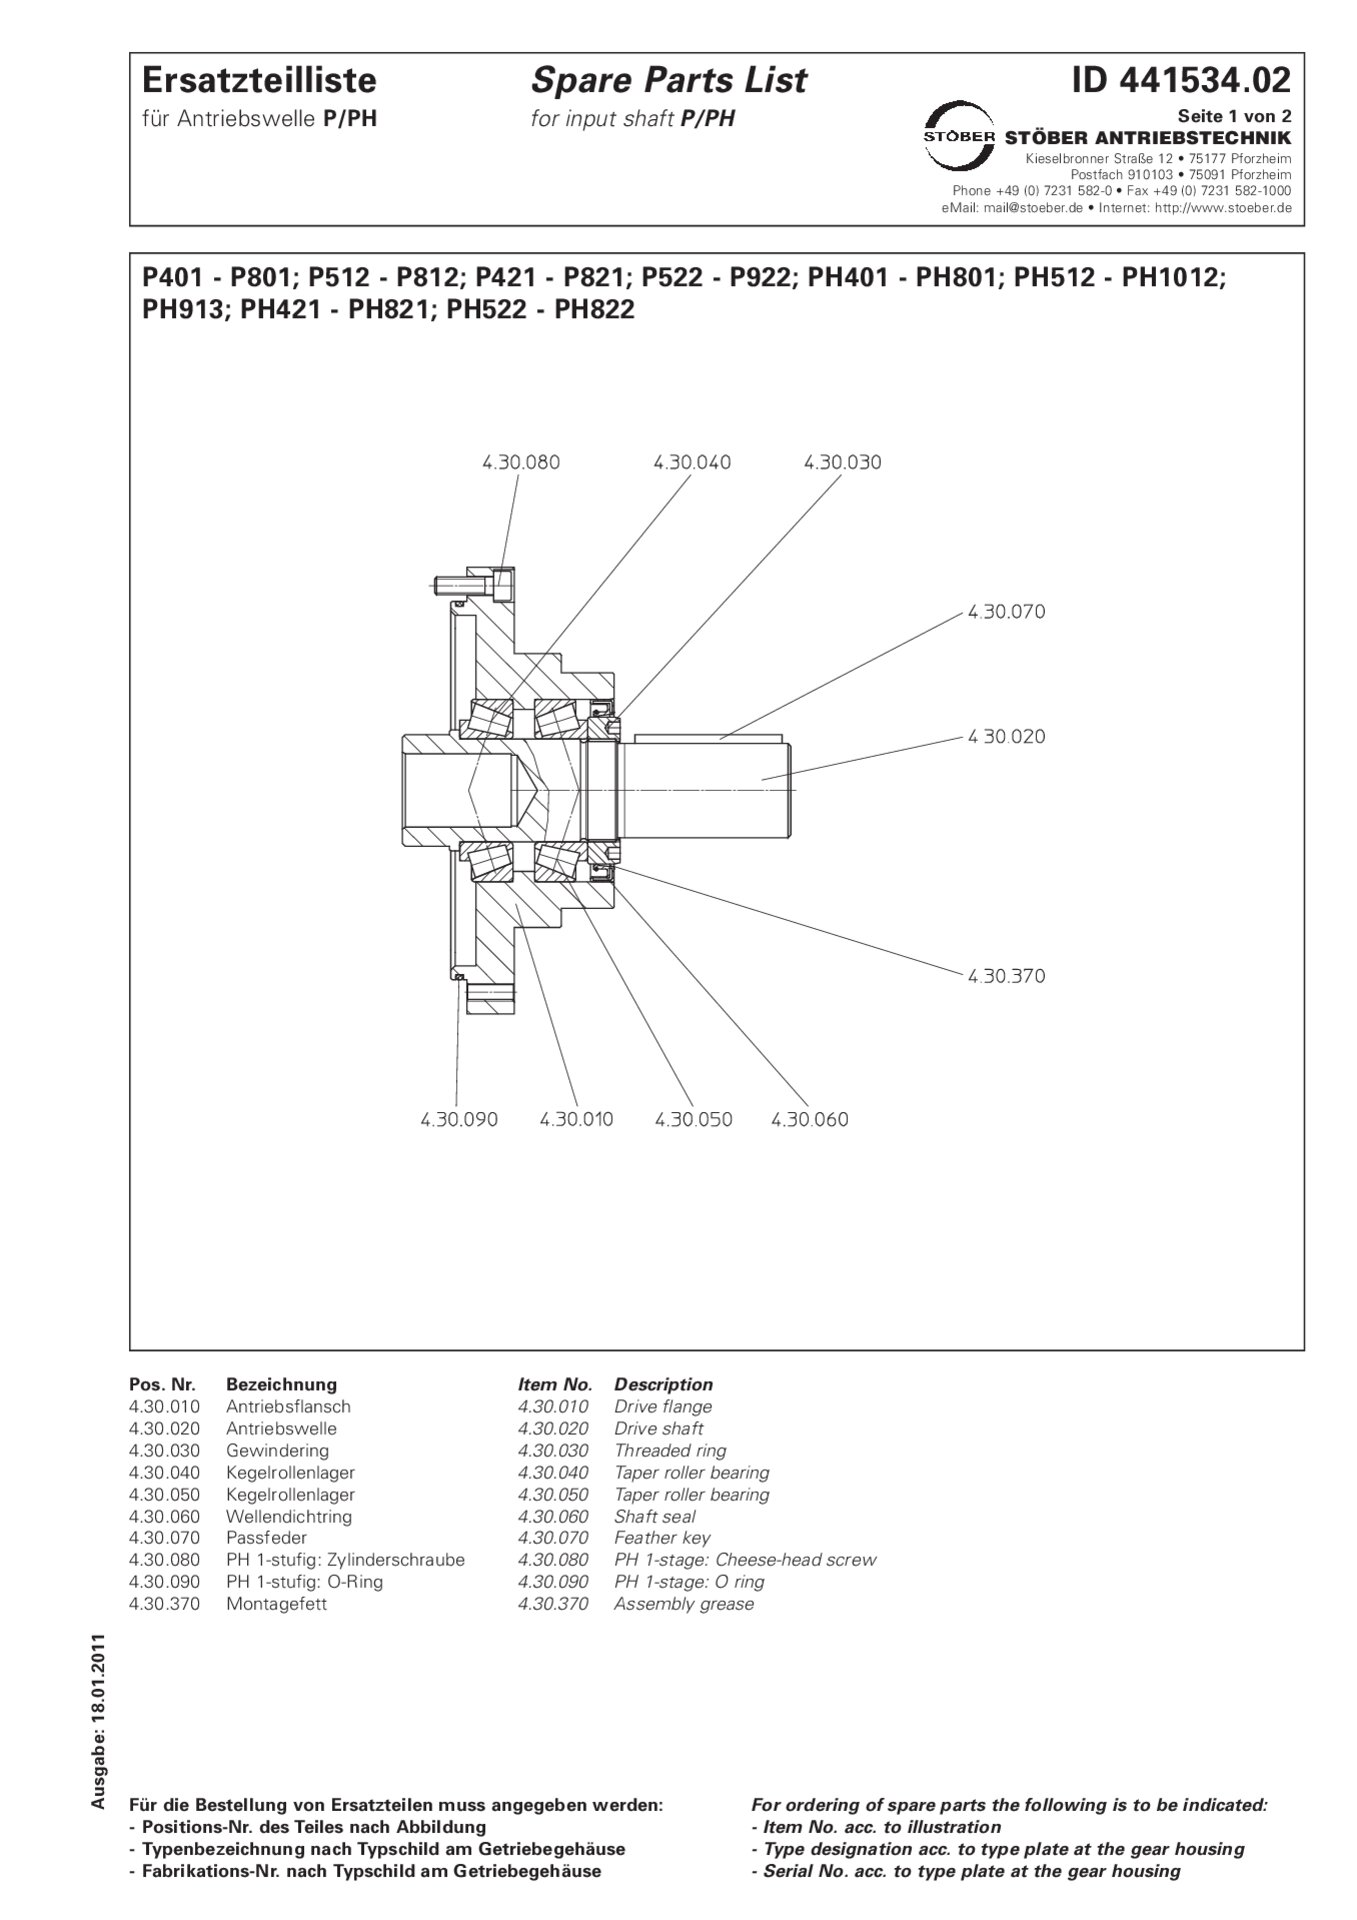 Spare parts list Input shaft P/PH